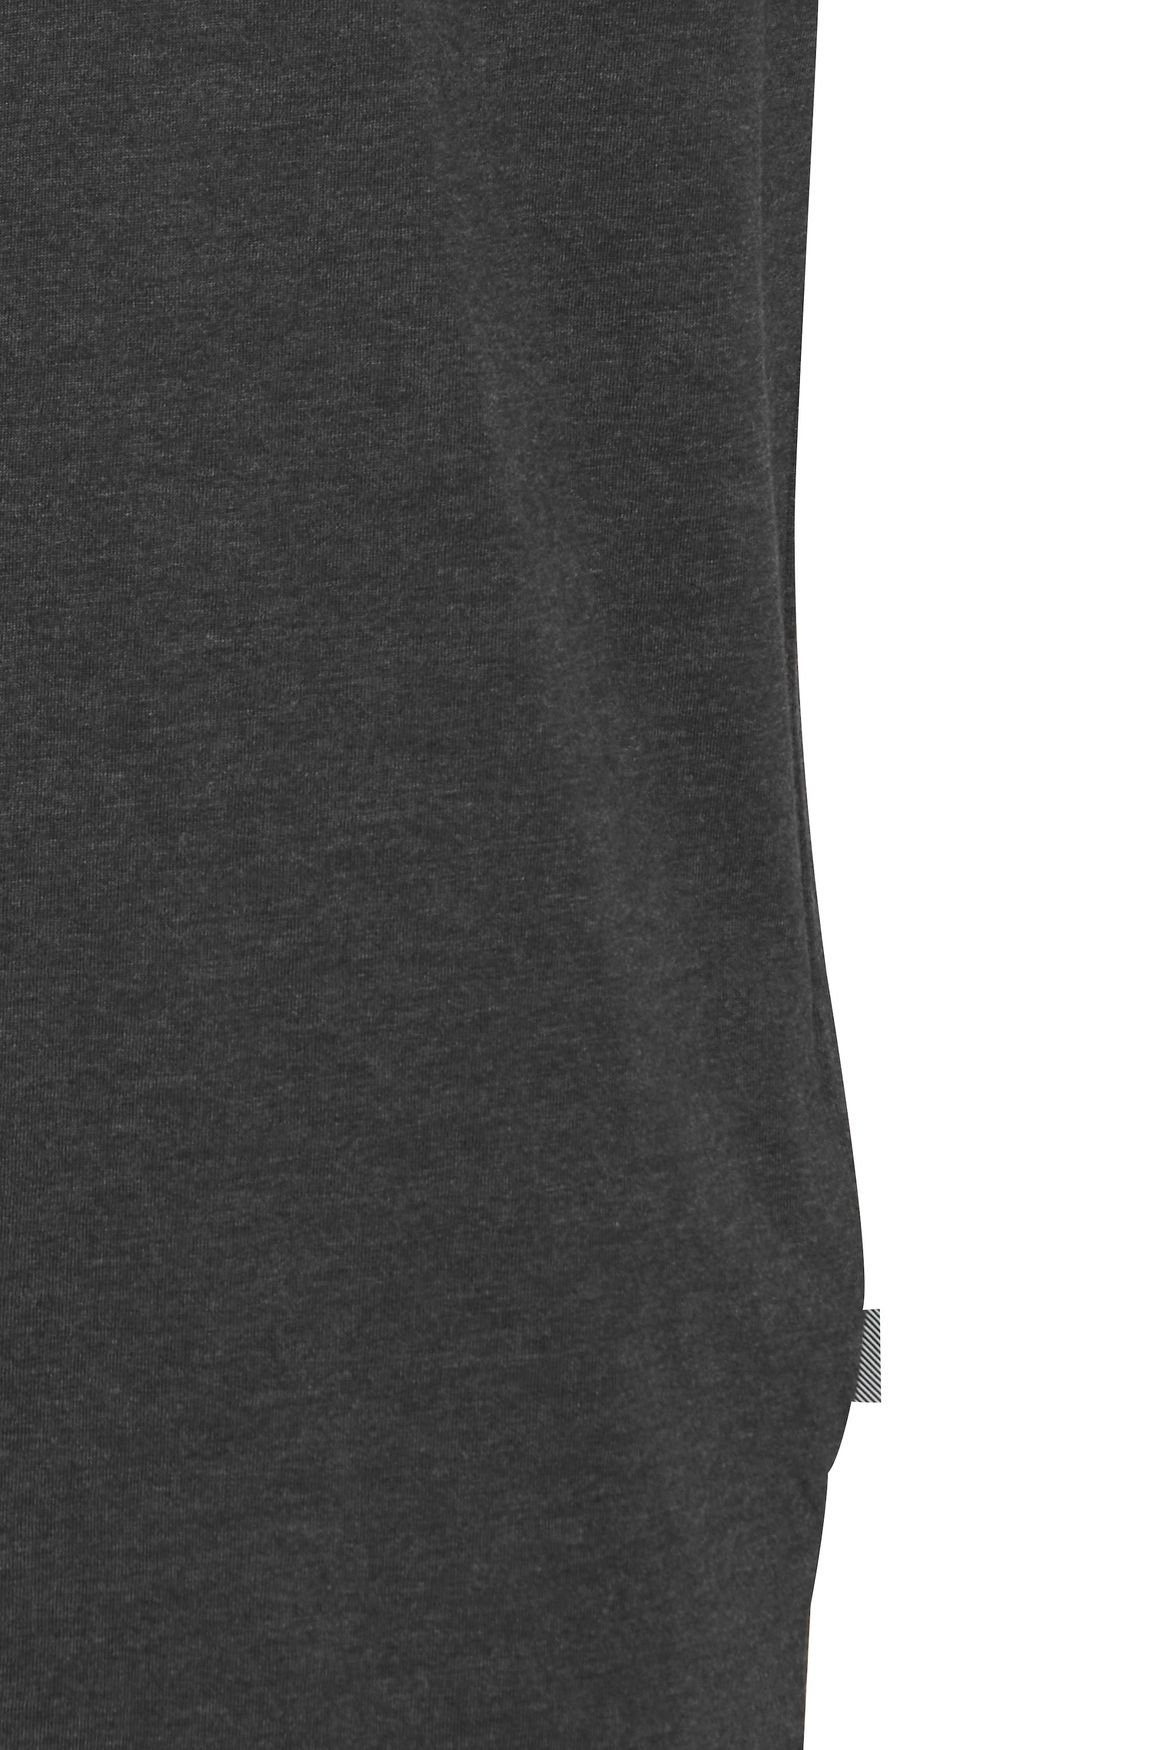 in (1-tlg) T-Shirt !Solid Dunkelgrau T-Shirt Basic Rundhals 4115 Einfarbiges